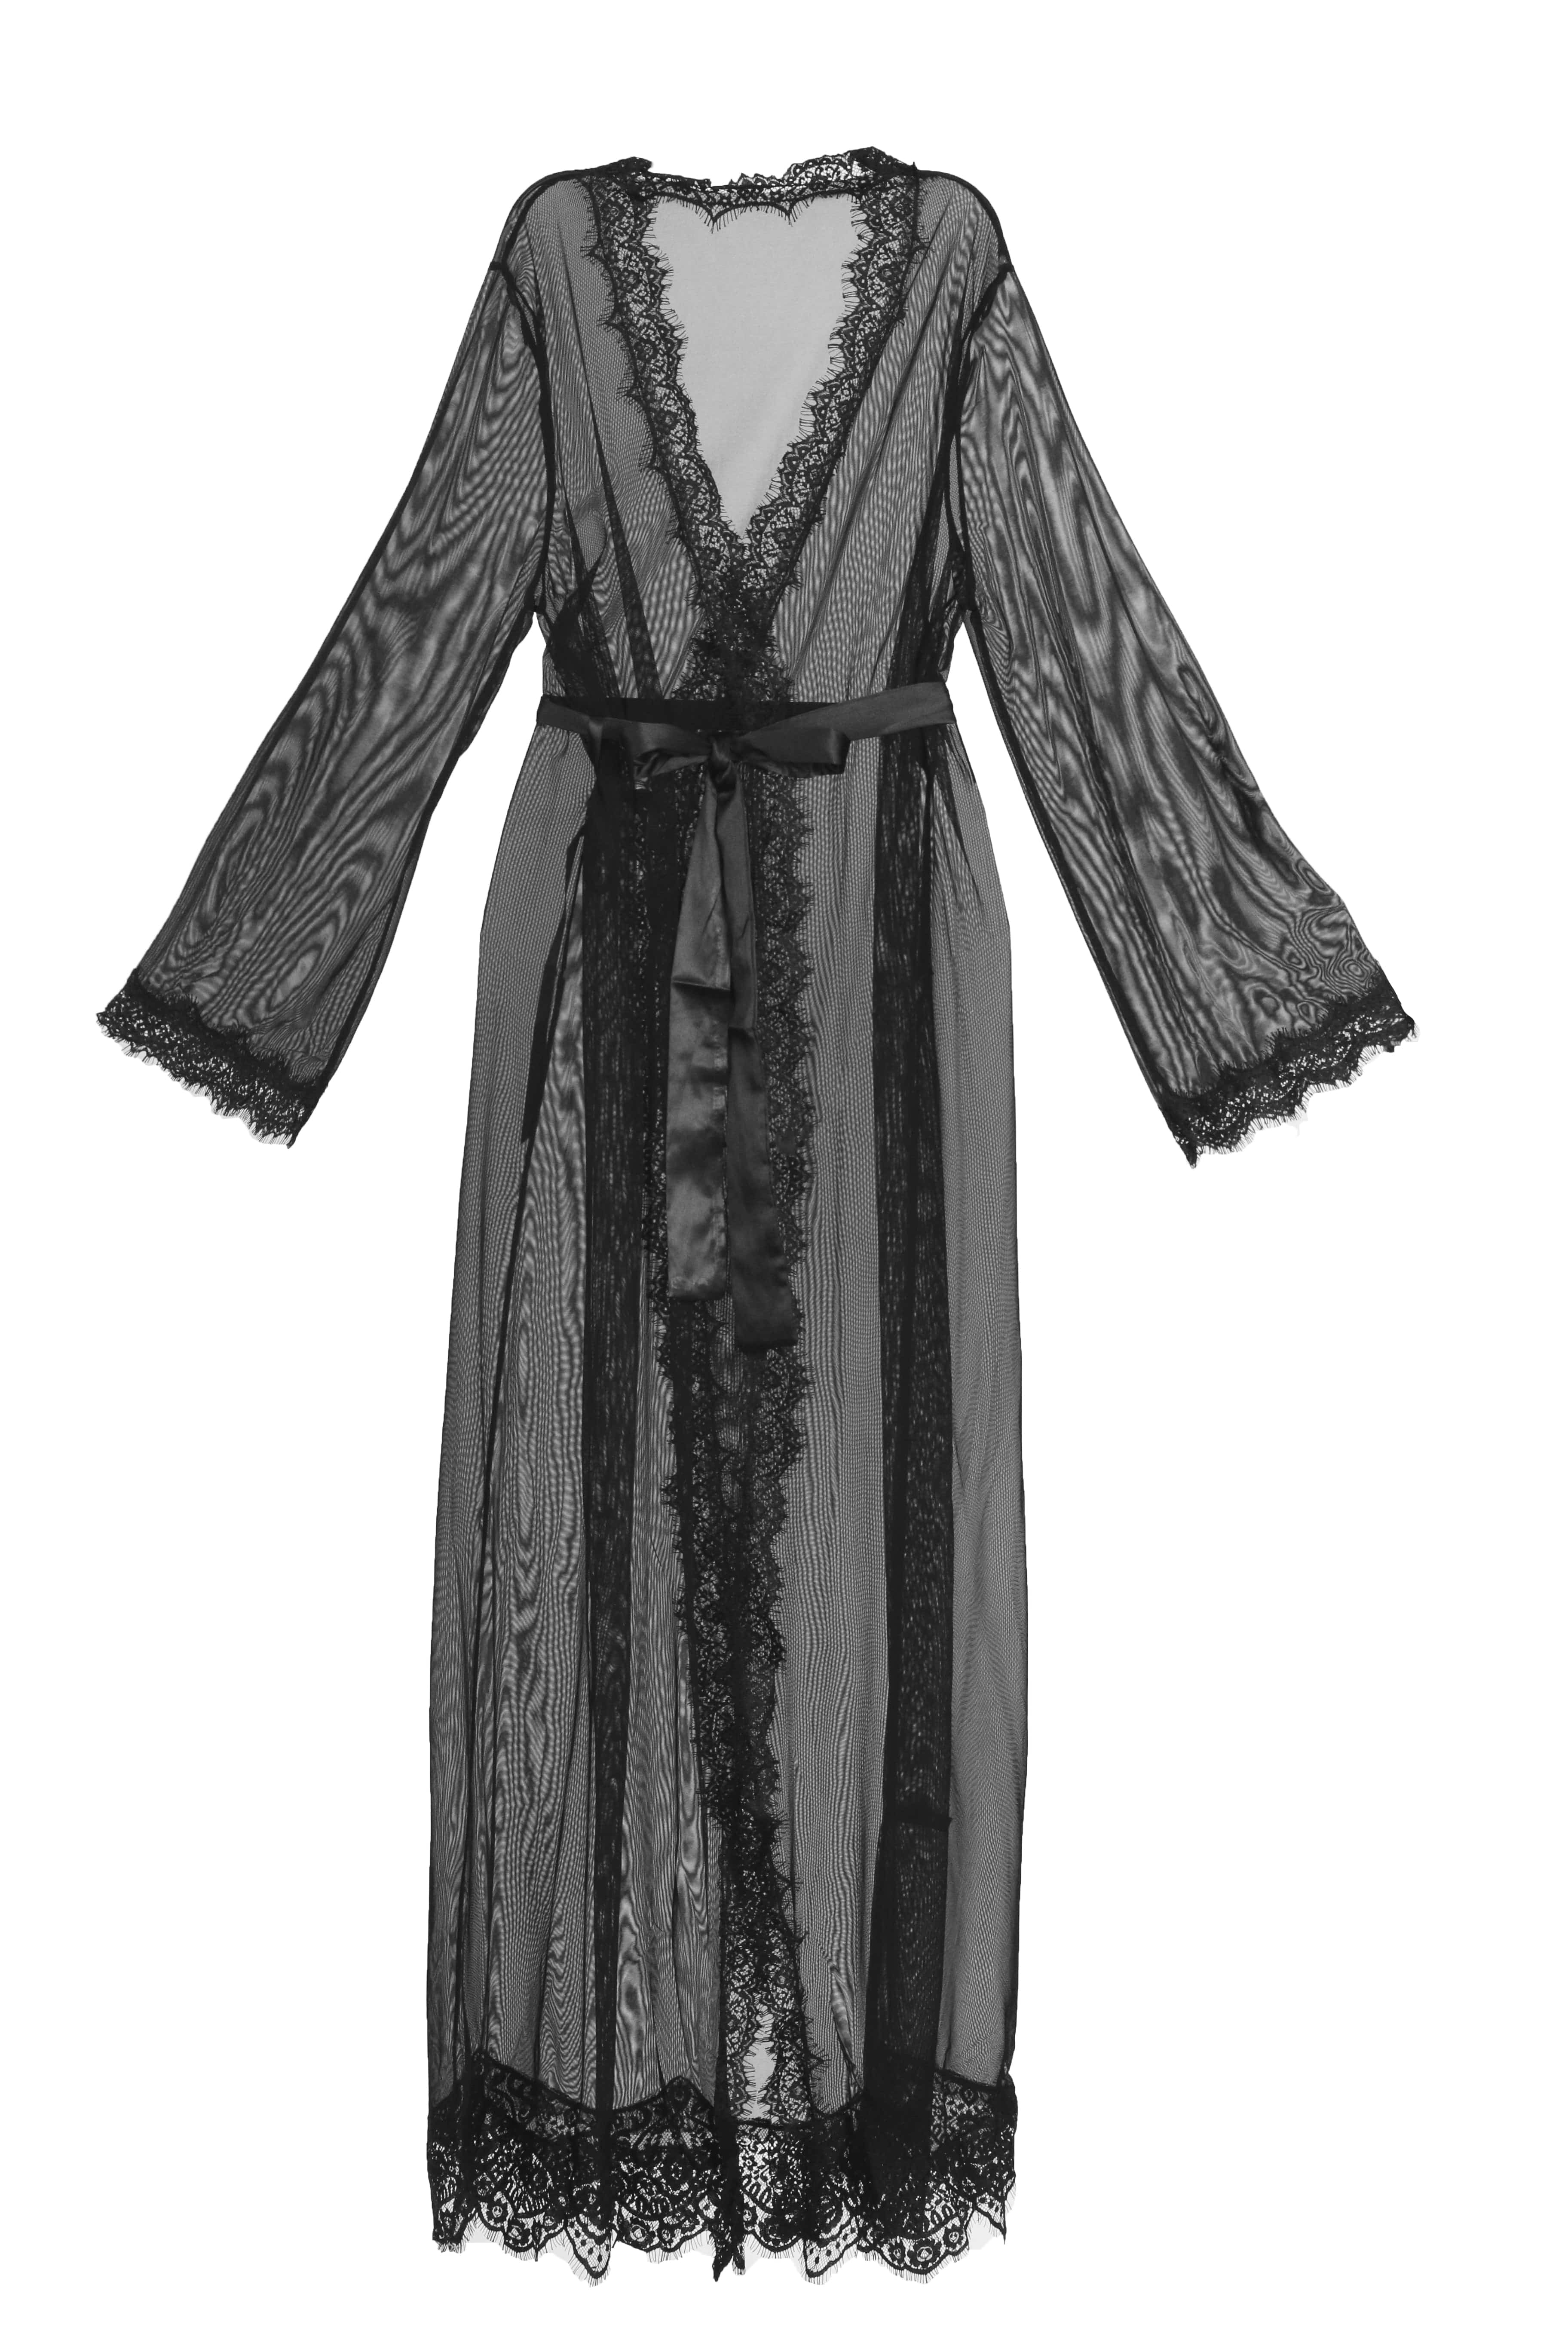 Provence Sheer Long Robe Set - Black - Chérie Amour